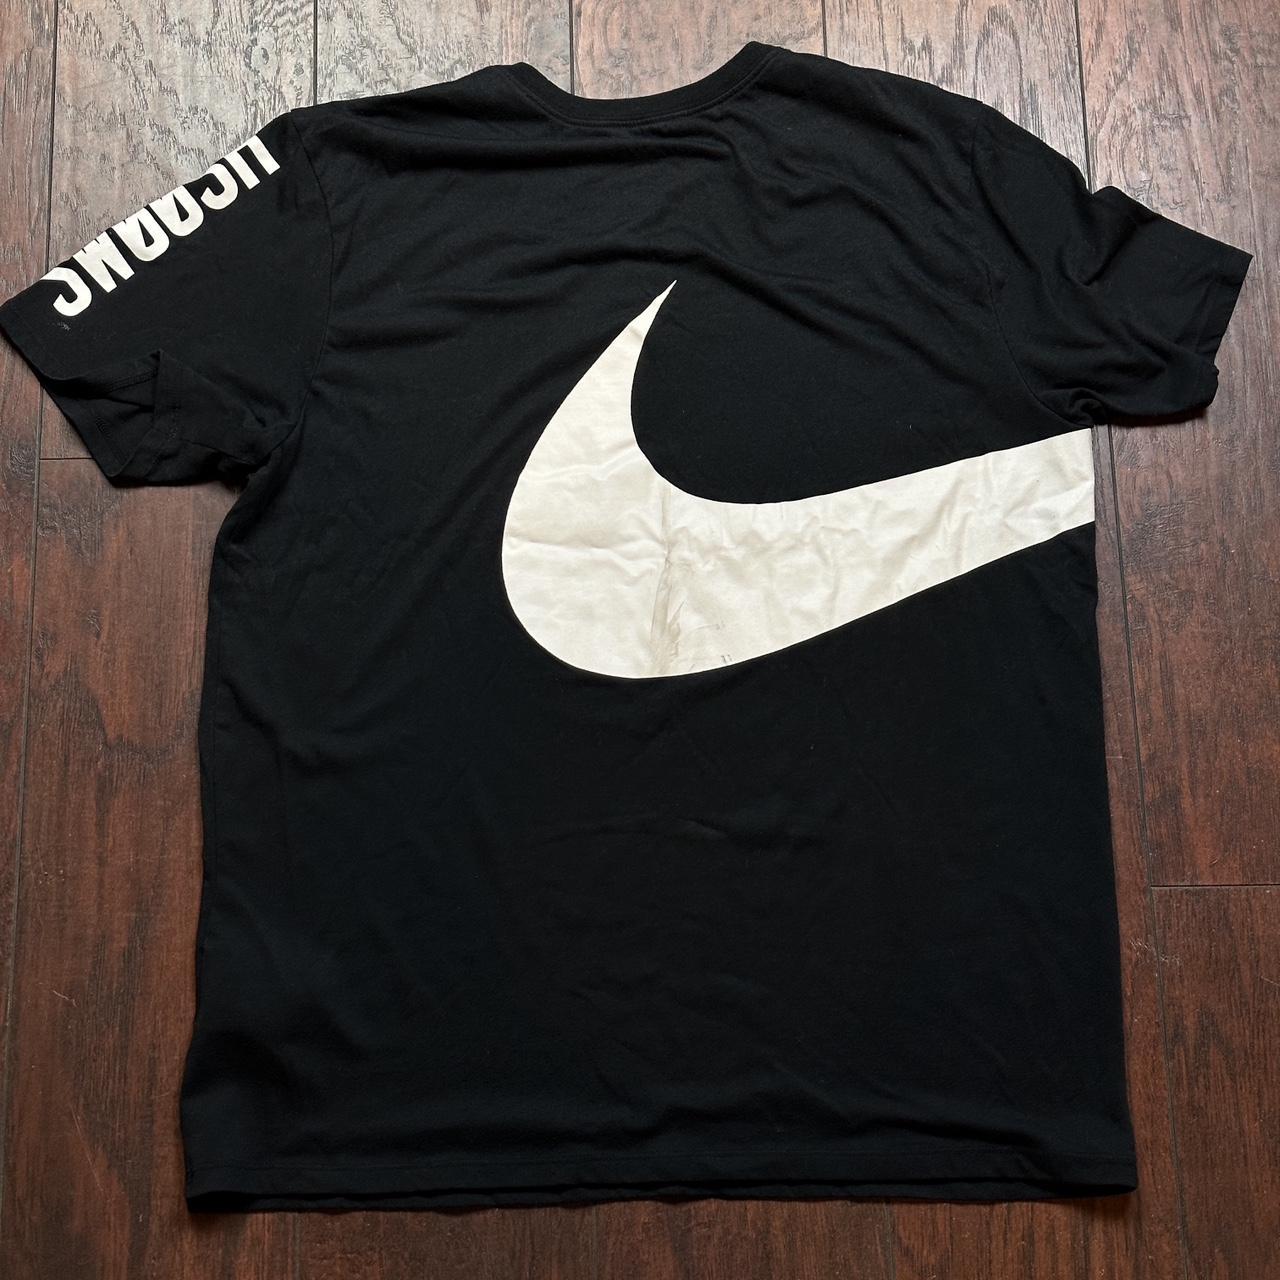 Nike Big swoosh athletic cut t shirt from Japan 🇯🇵